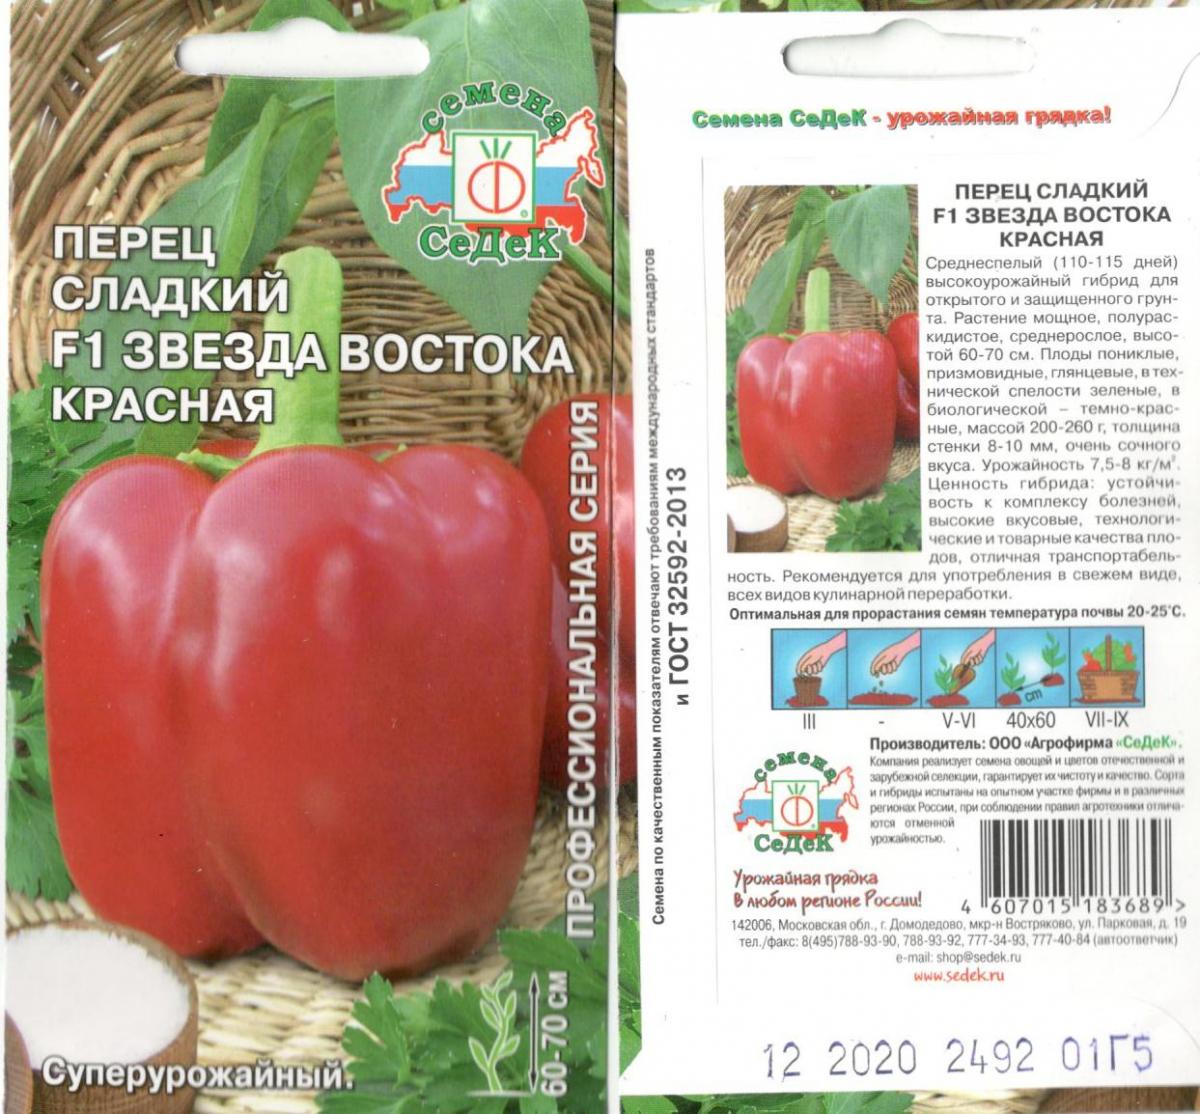 Необыкновенный сорт с экзотическими нотками — томат восток f1: описание и характеристика гибрида